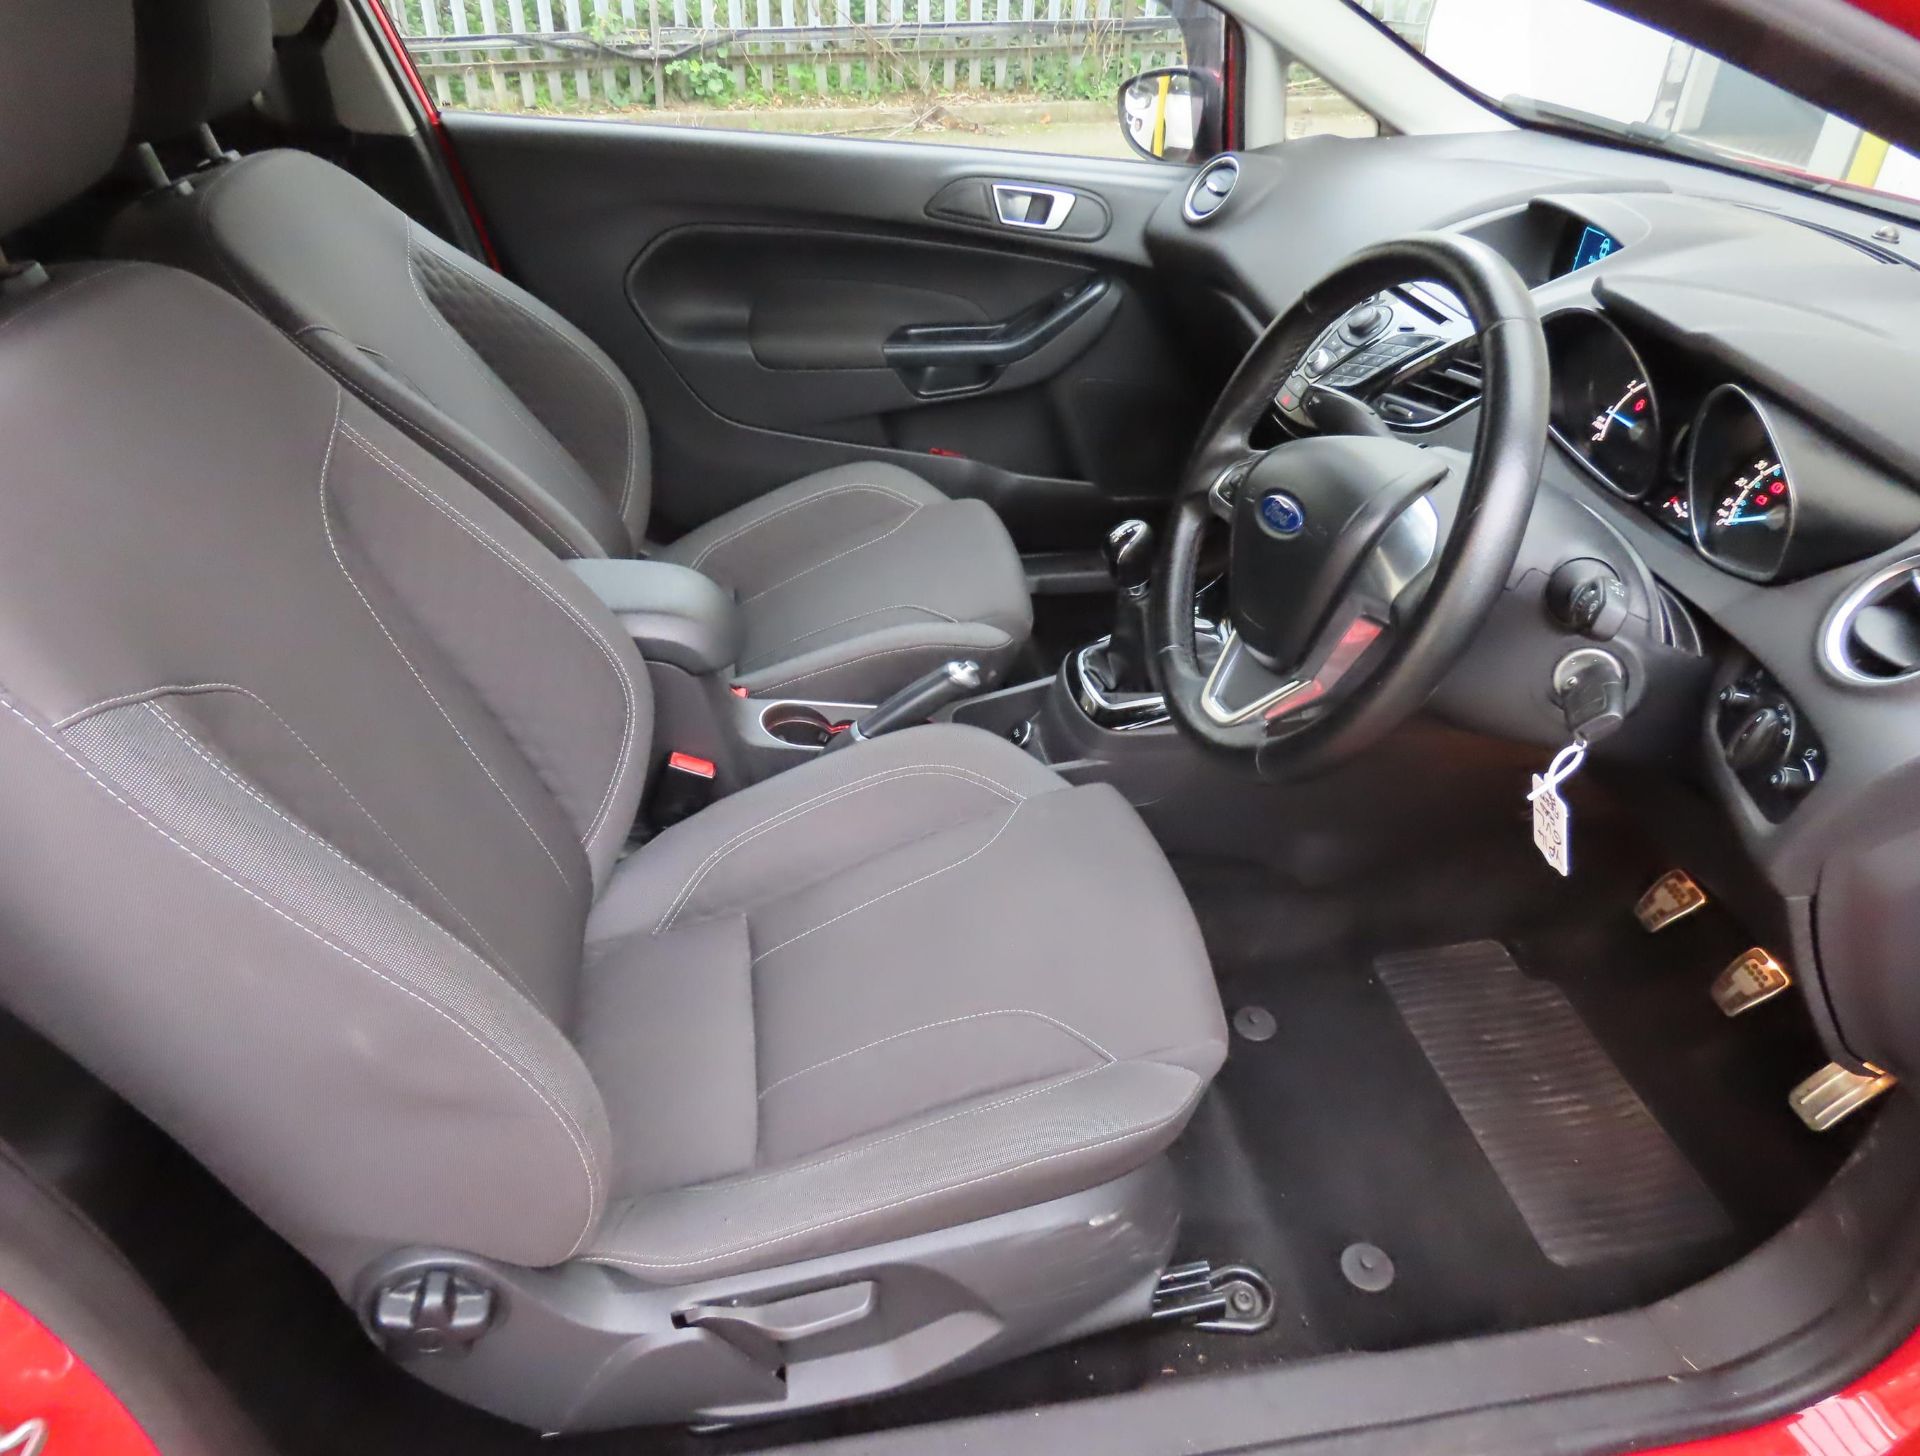 2014 Ford Fiesta 1.0 Zetec S 5 Door Hatchback - FULL SERVICE HISTORY - CL505 - NO VAT ON THE HAMMER - Image 5 of 12